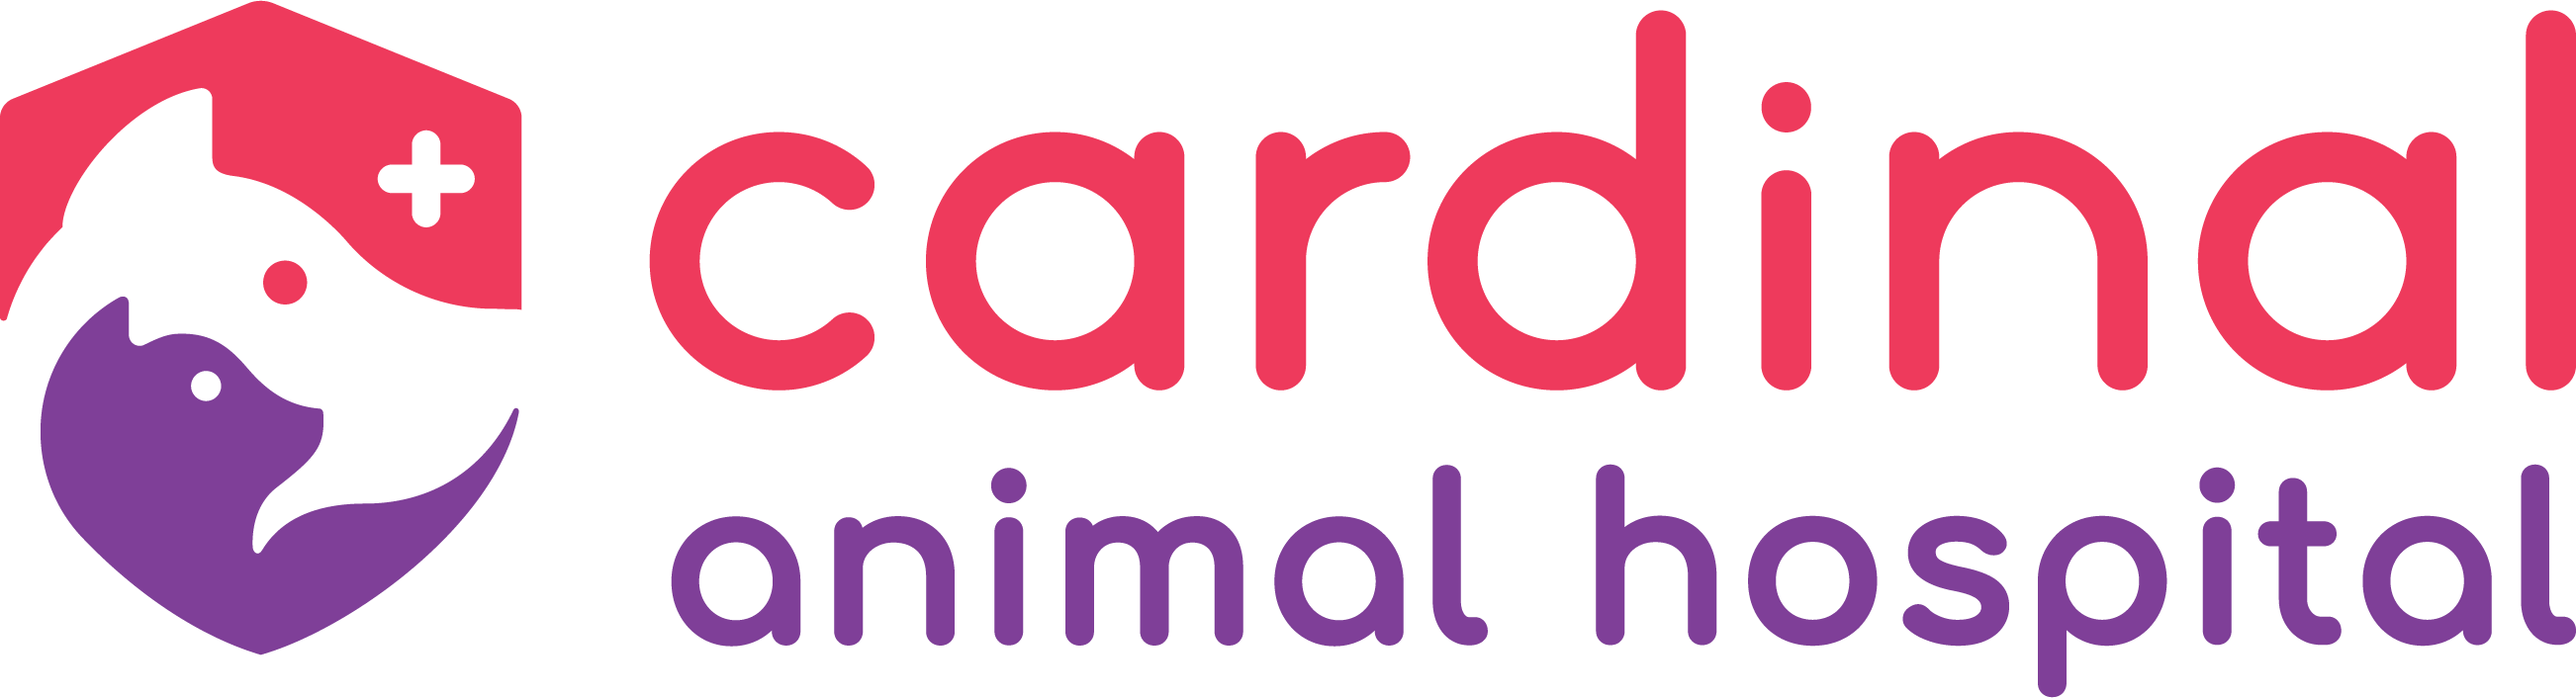 Cardinal Animal Hospital